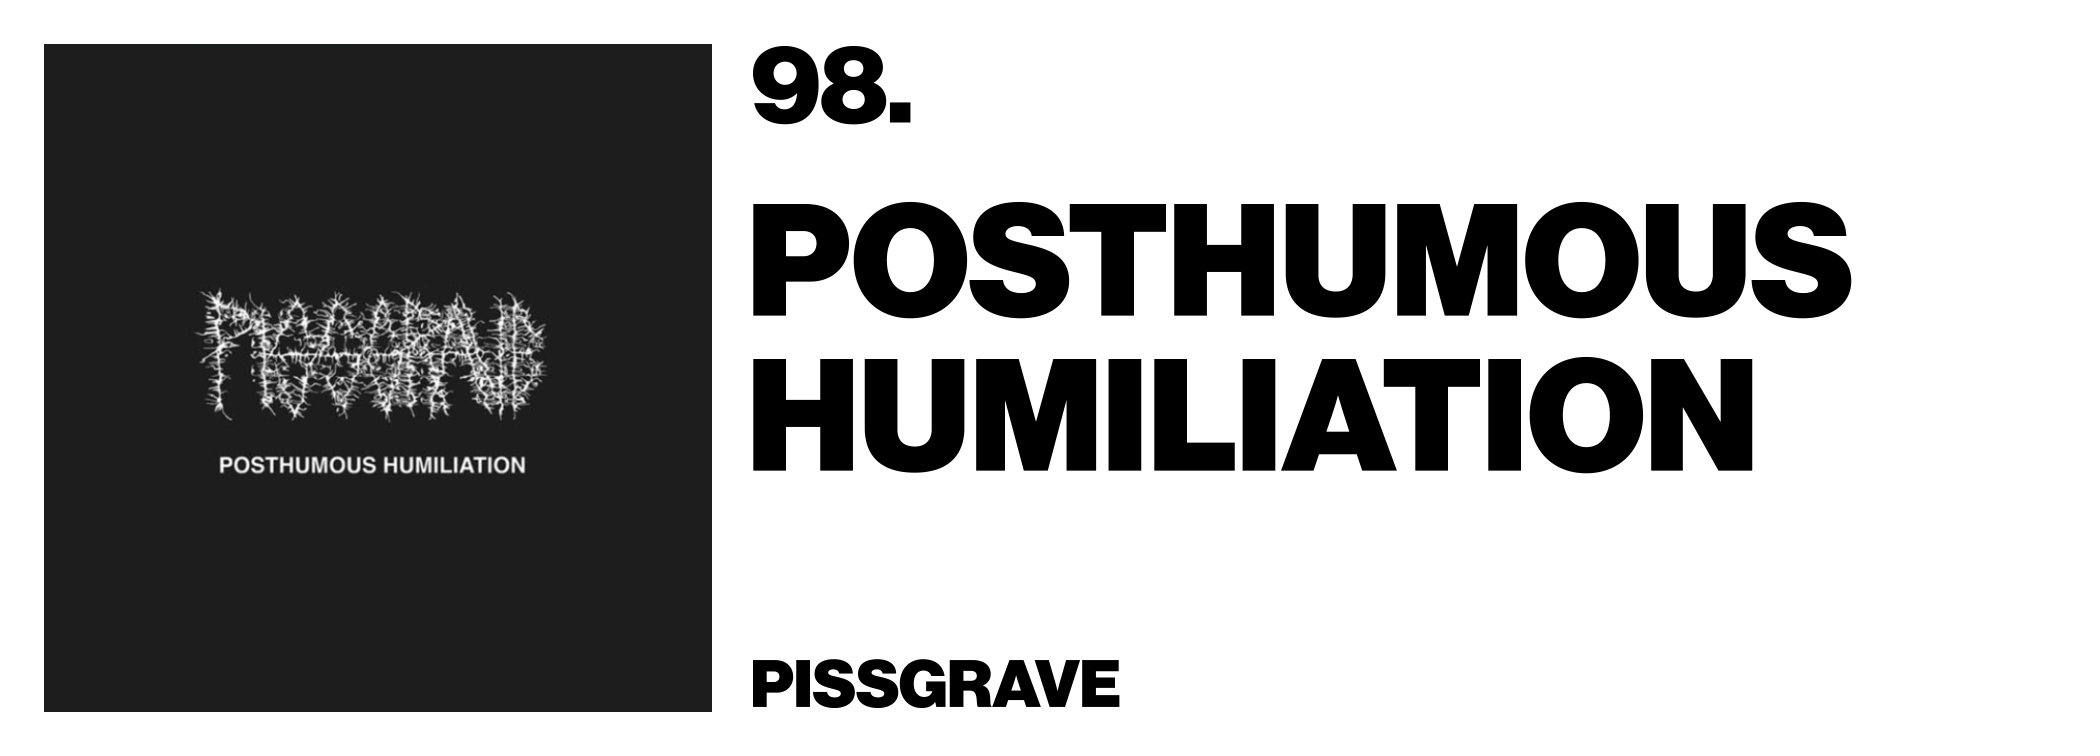 1575919665755-98-Pissgrave-Posthumous-Humiliation